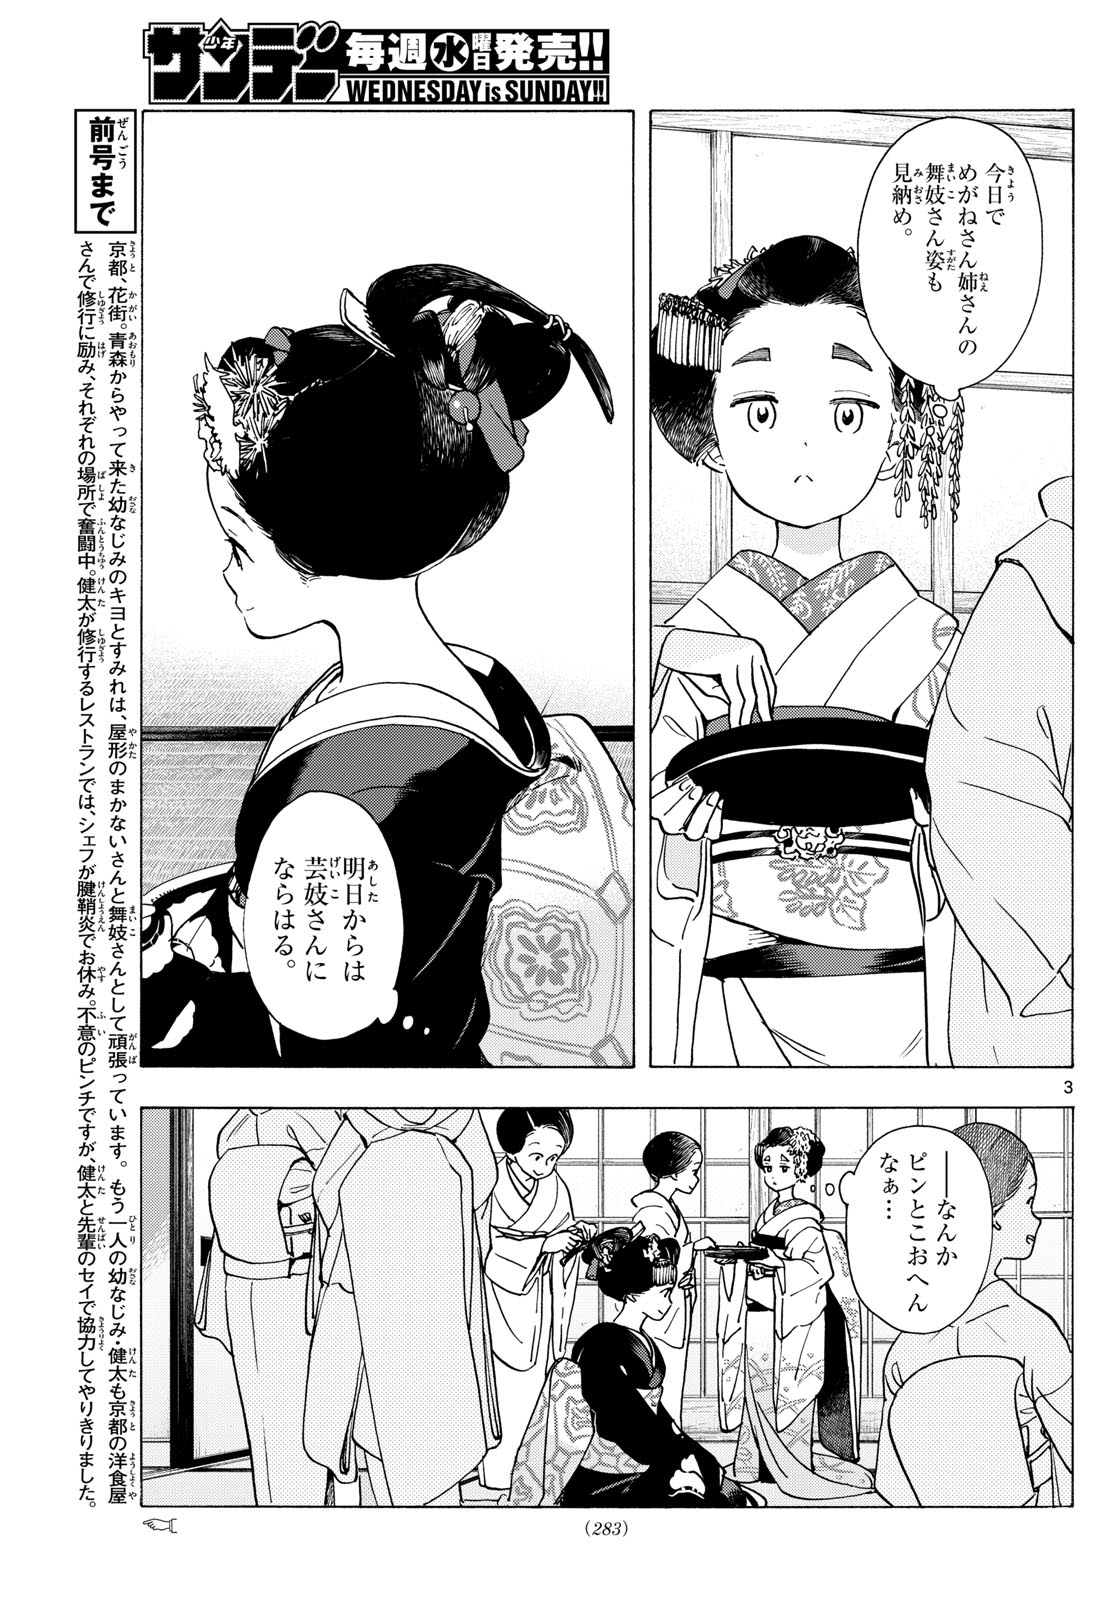 Maiko-san Chi no Makanai-san - Chapter 293 - Page 3